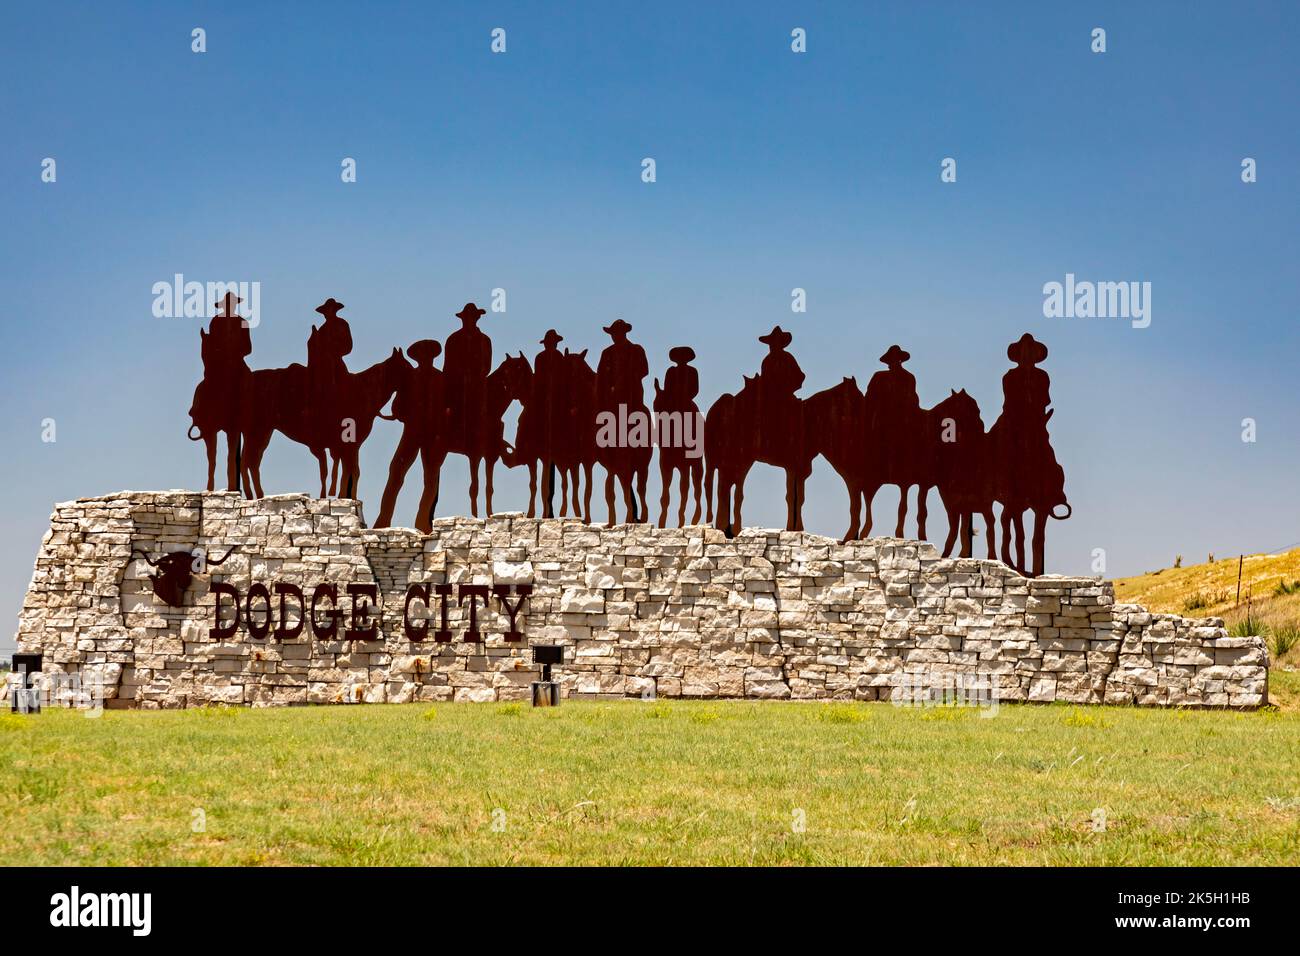 Dodge City, Kansas - A cowboy sculpture welcomes visitors to Dodge City. Stock Photo